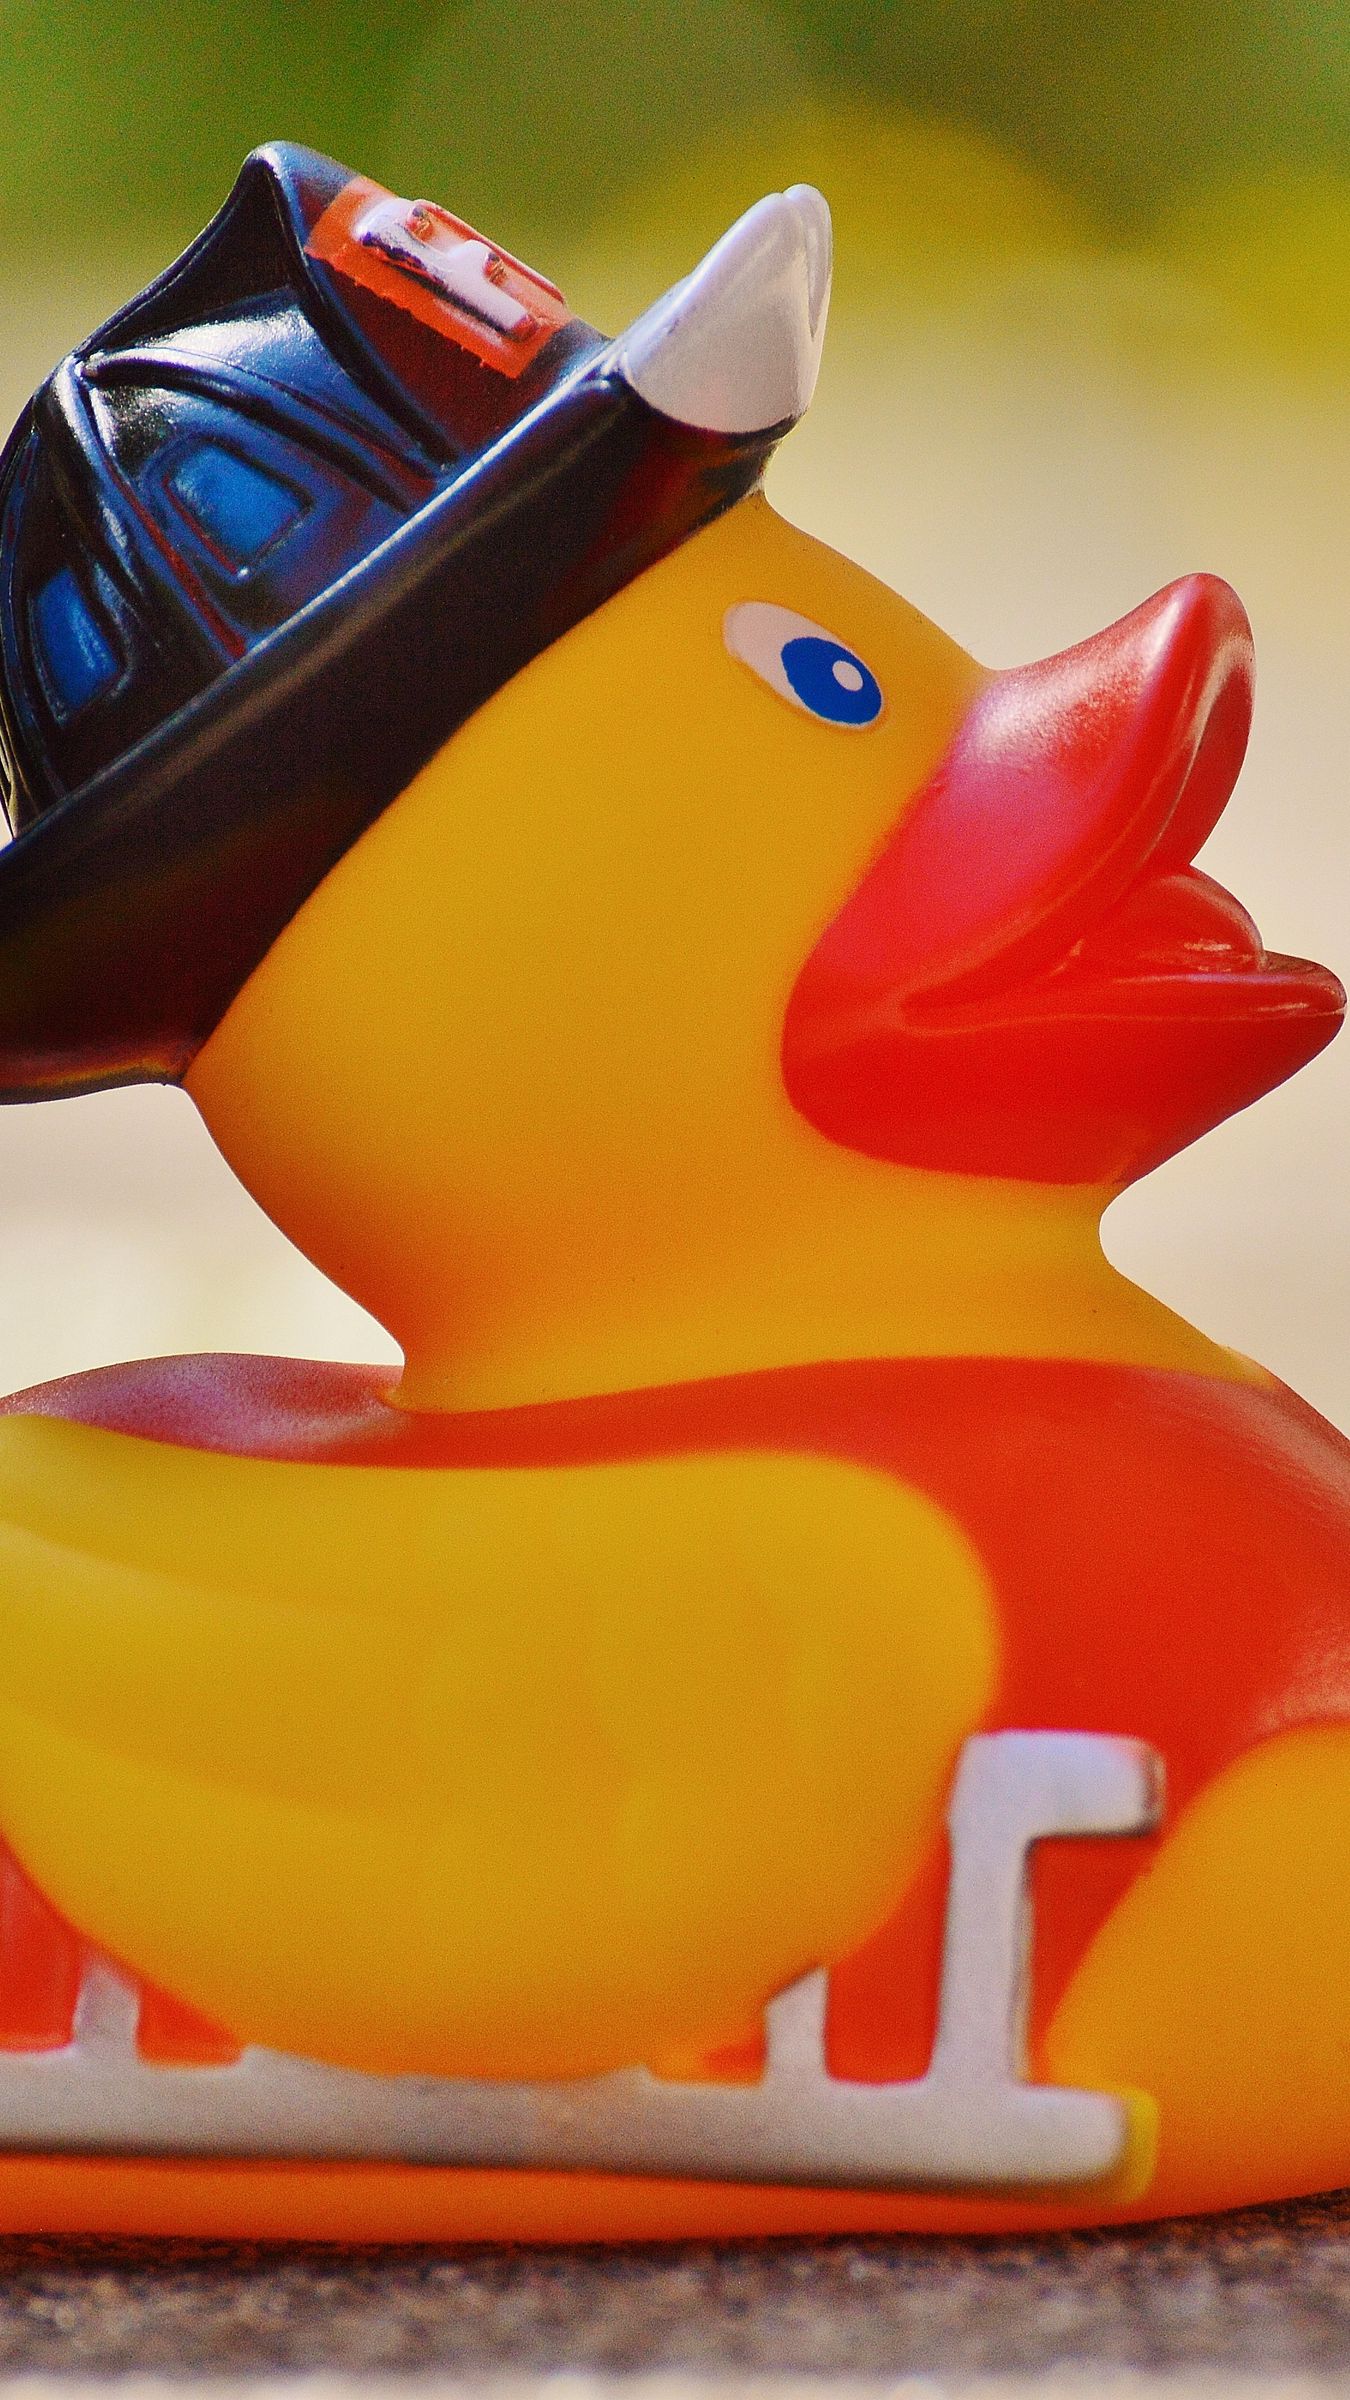 Wallpaper Rubber Duck, Duck, Toy - Rubber Duck Iphone , HD Wallpaper & Backgrounds